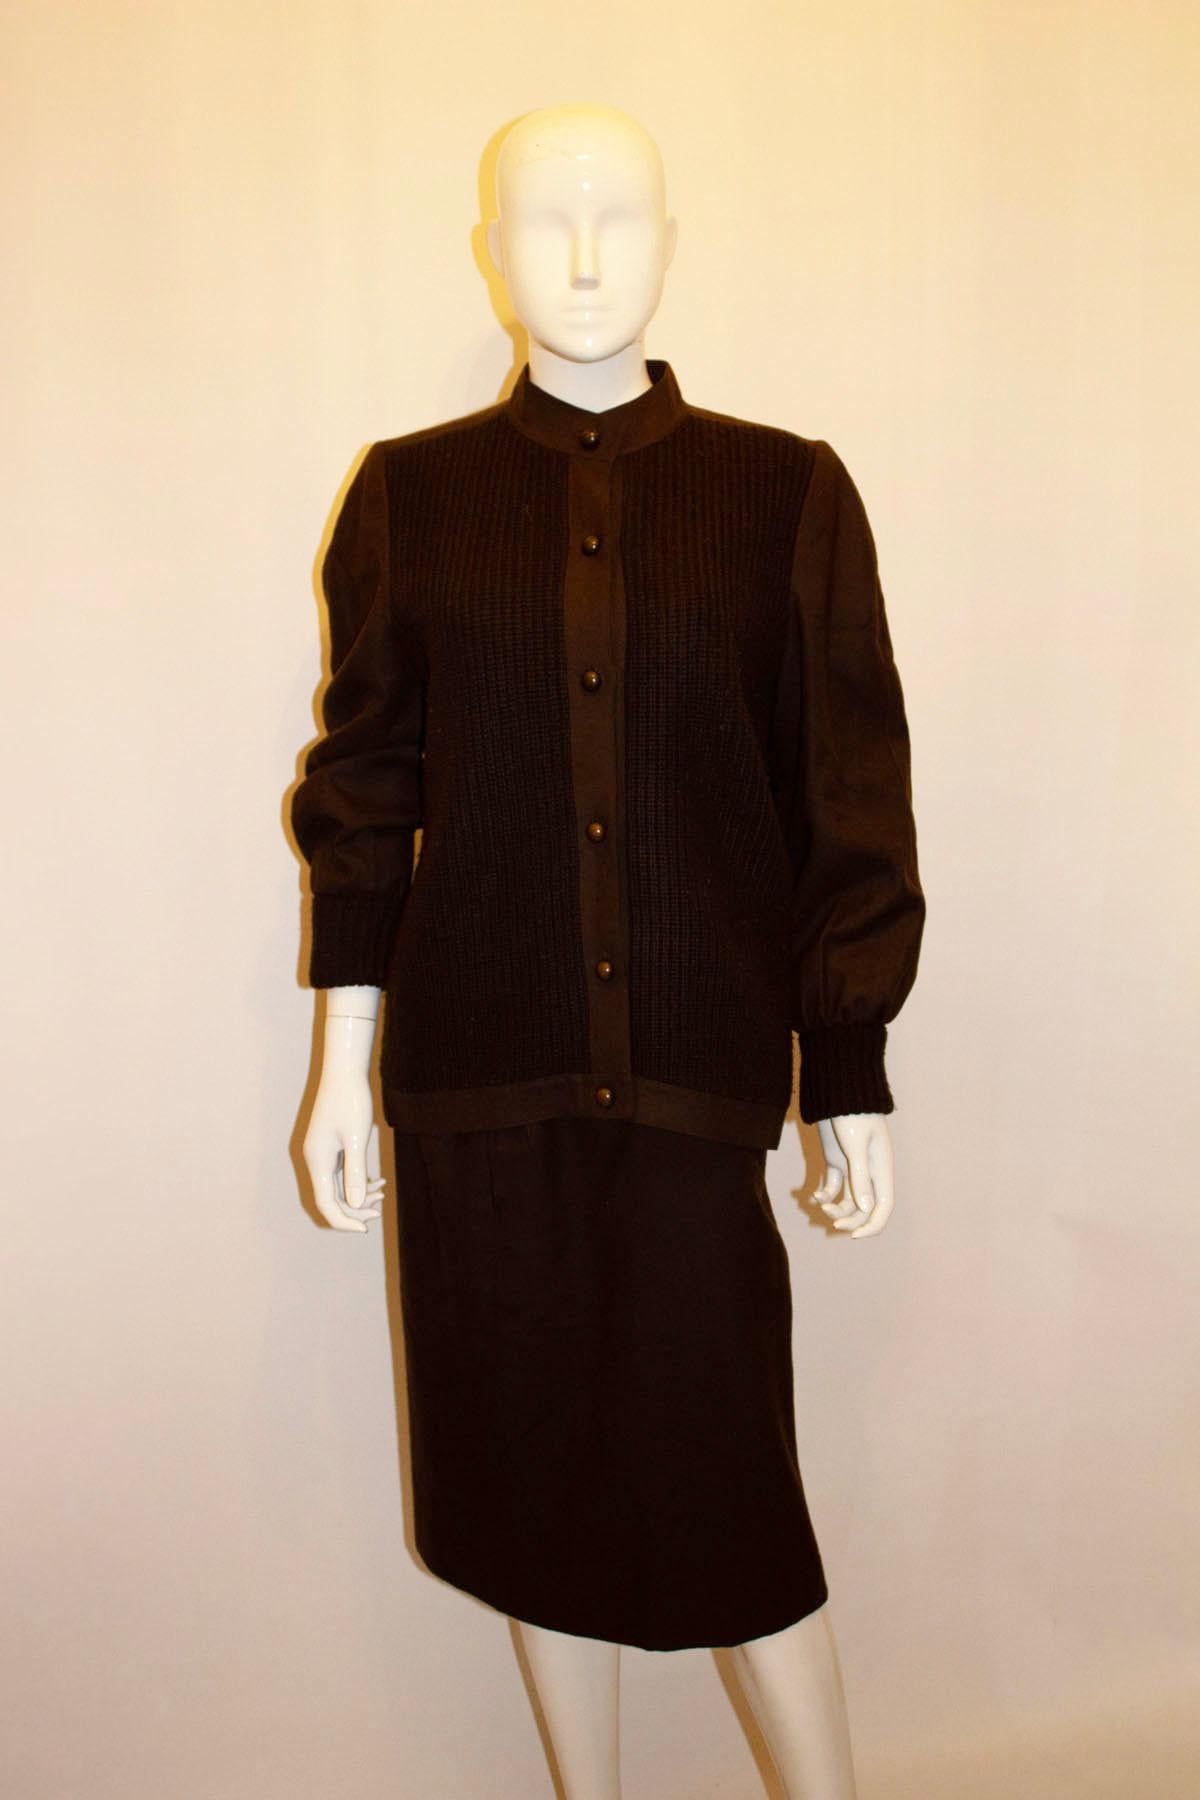 Vintage Christian Dior London Jacket and Skirt For Sale 1